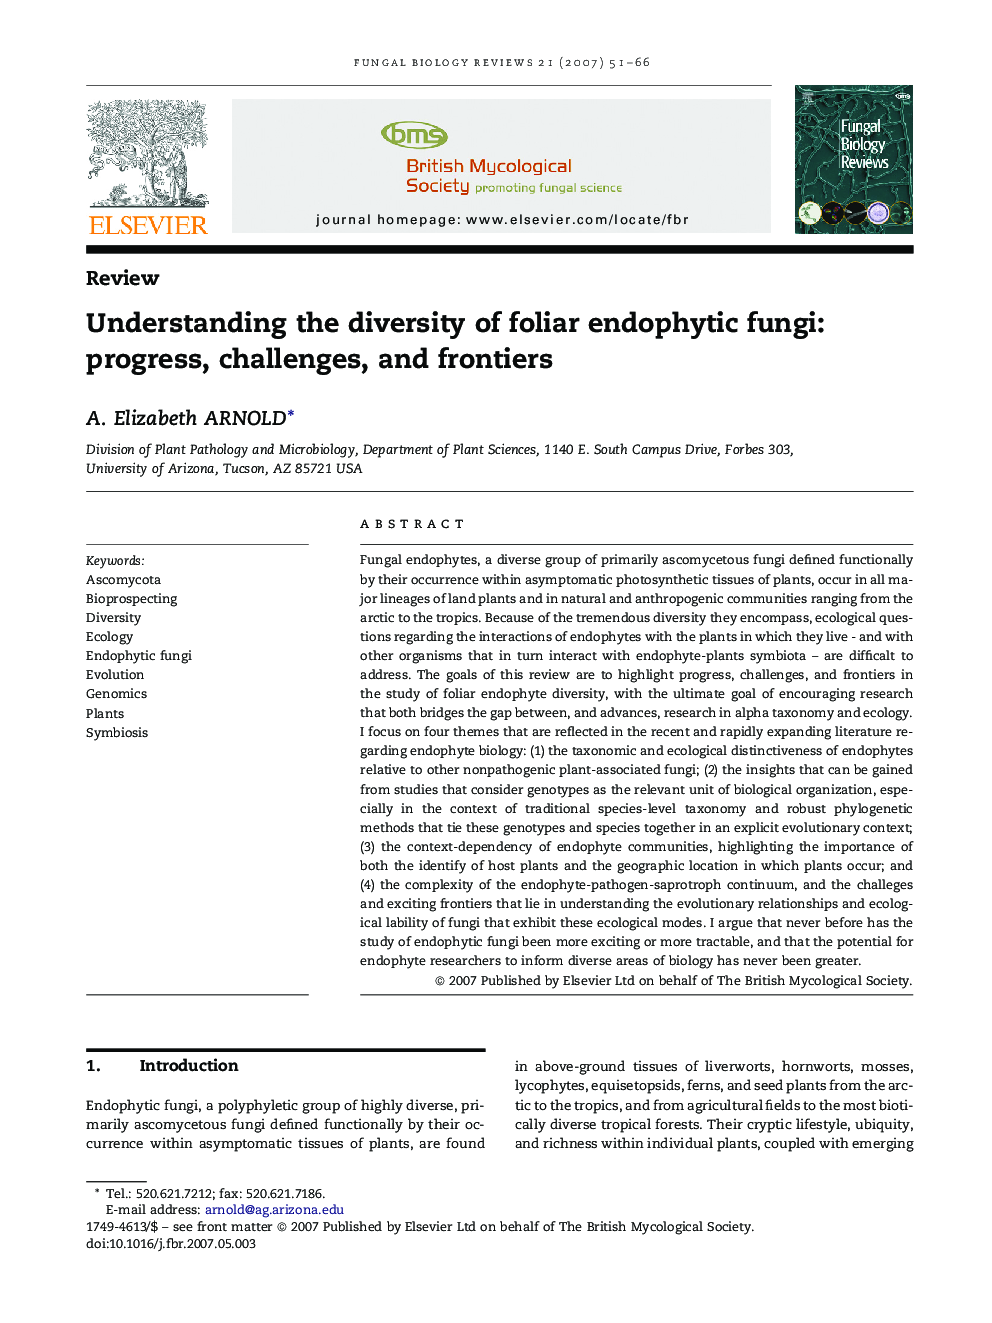 Understanding the diversity of foliar endophytic fungi: progress, challenges, and frontiers